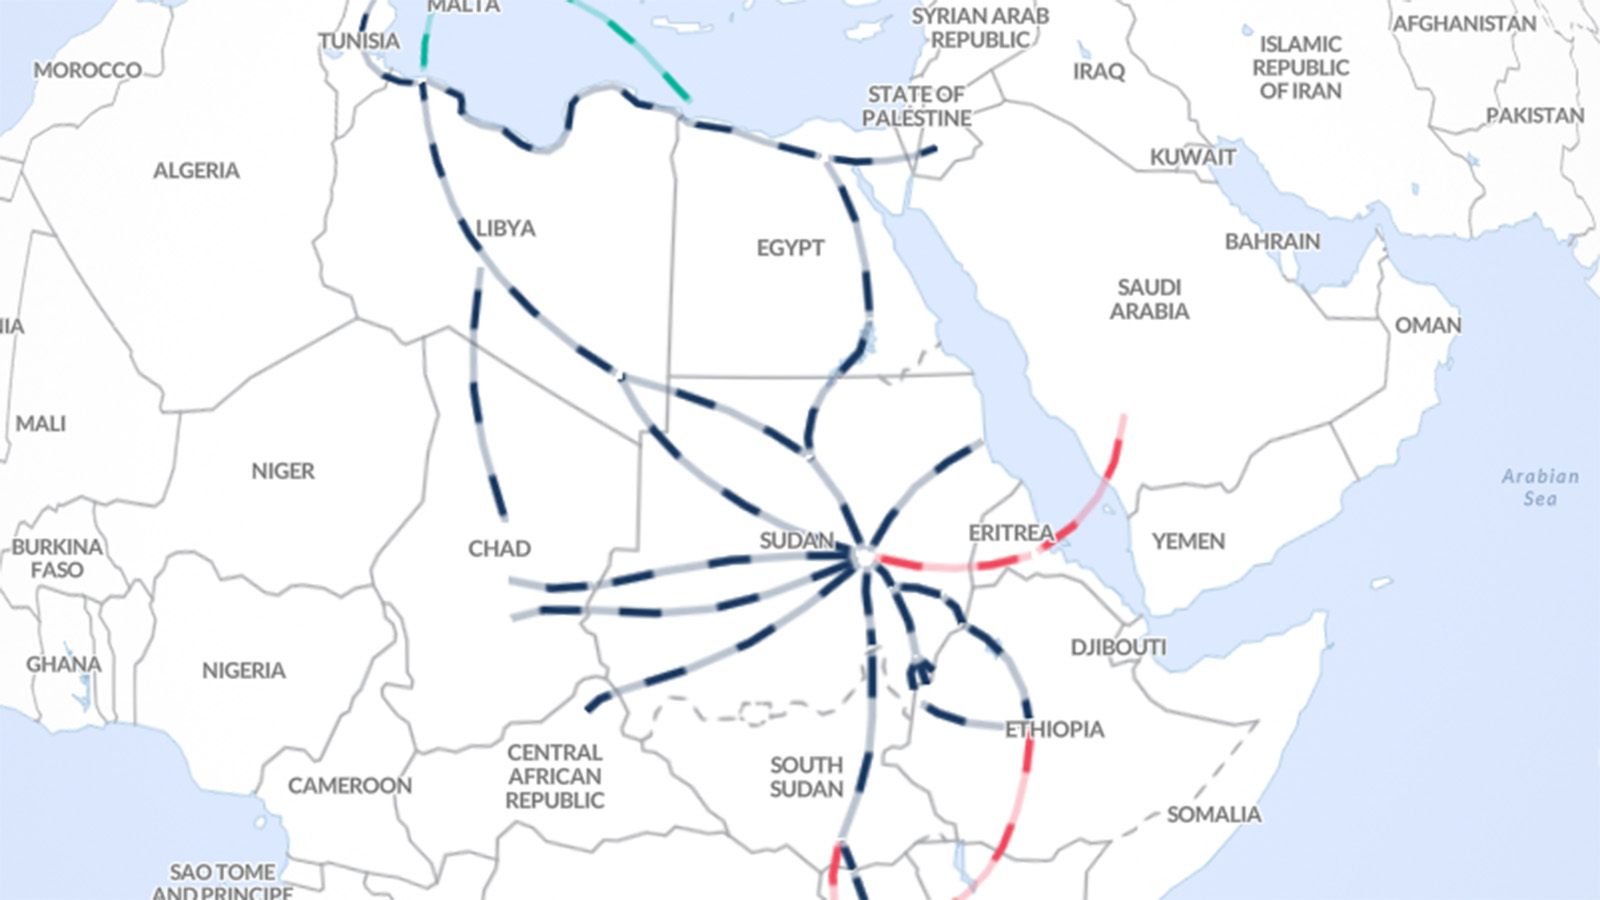 Onward movements from Sudan